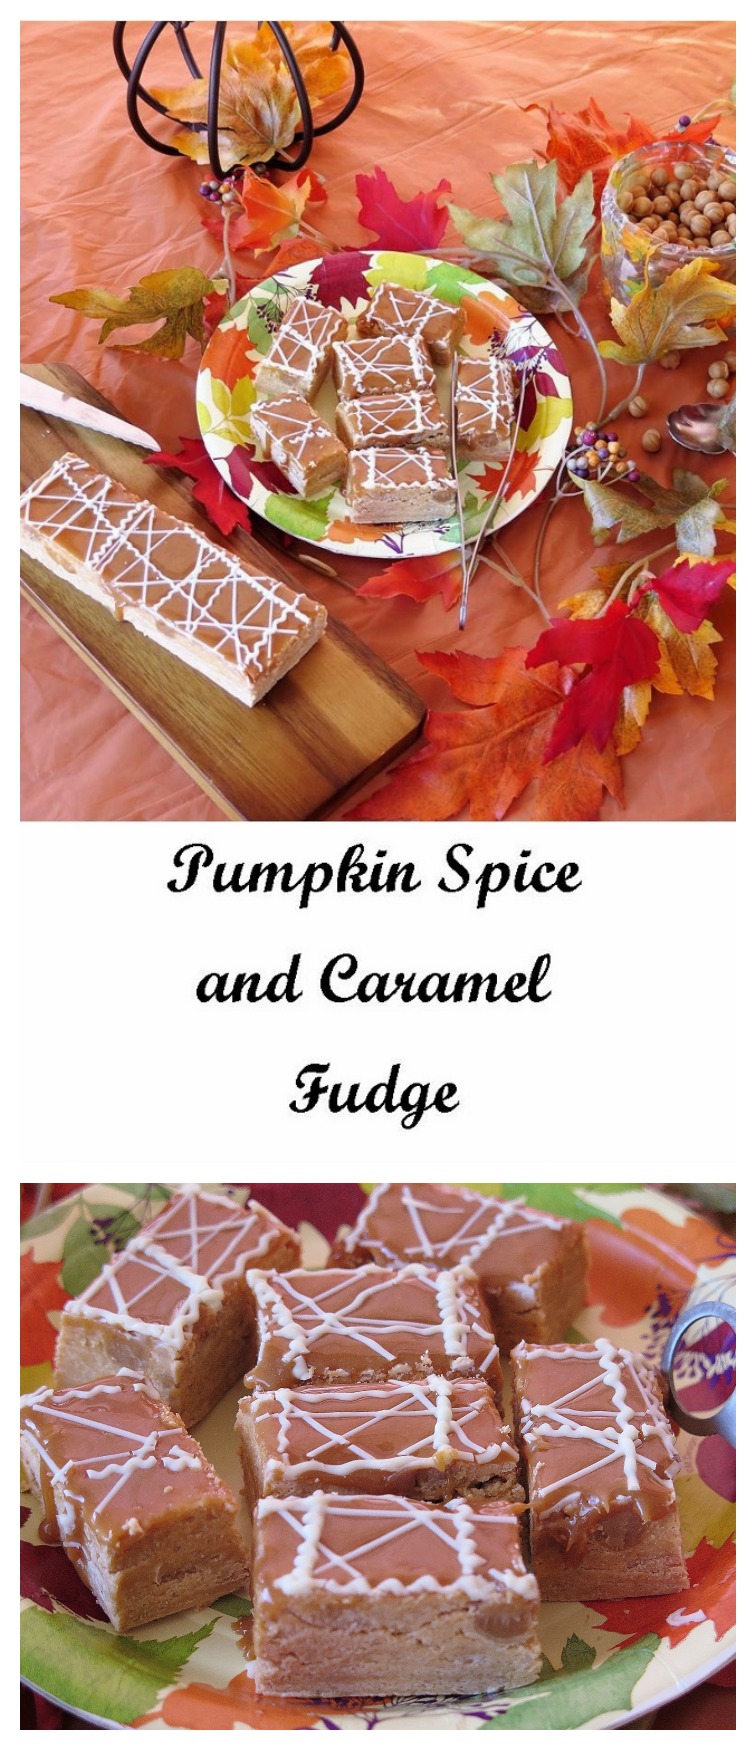 Pumpkin Spice and Caramel Fudge 